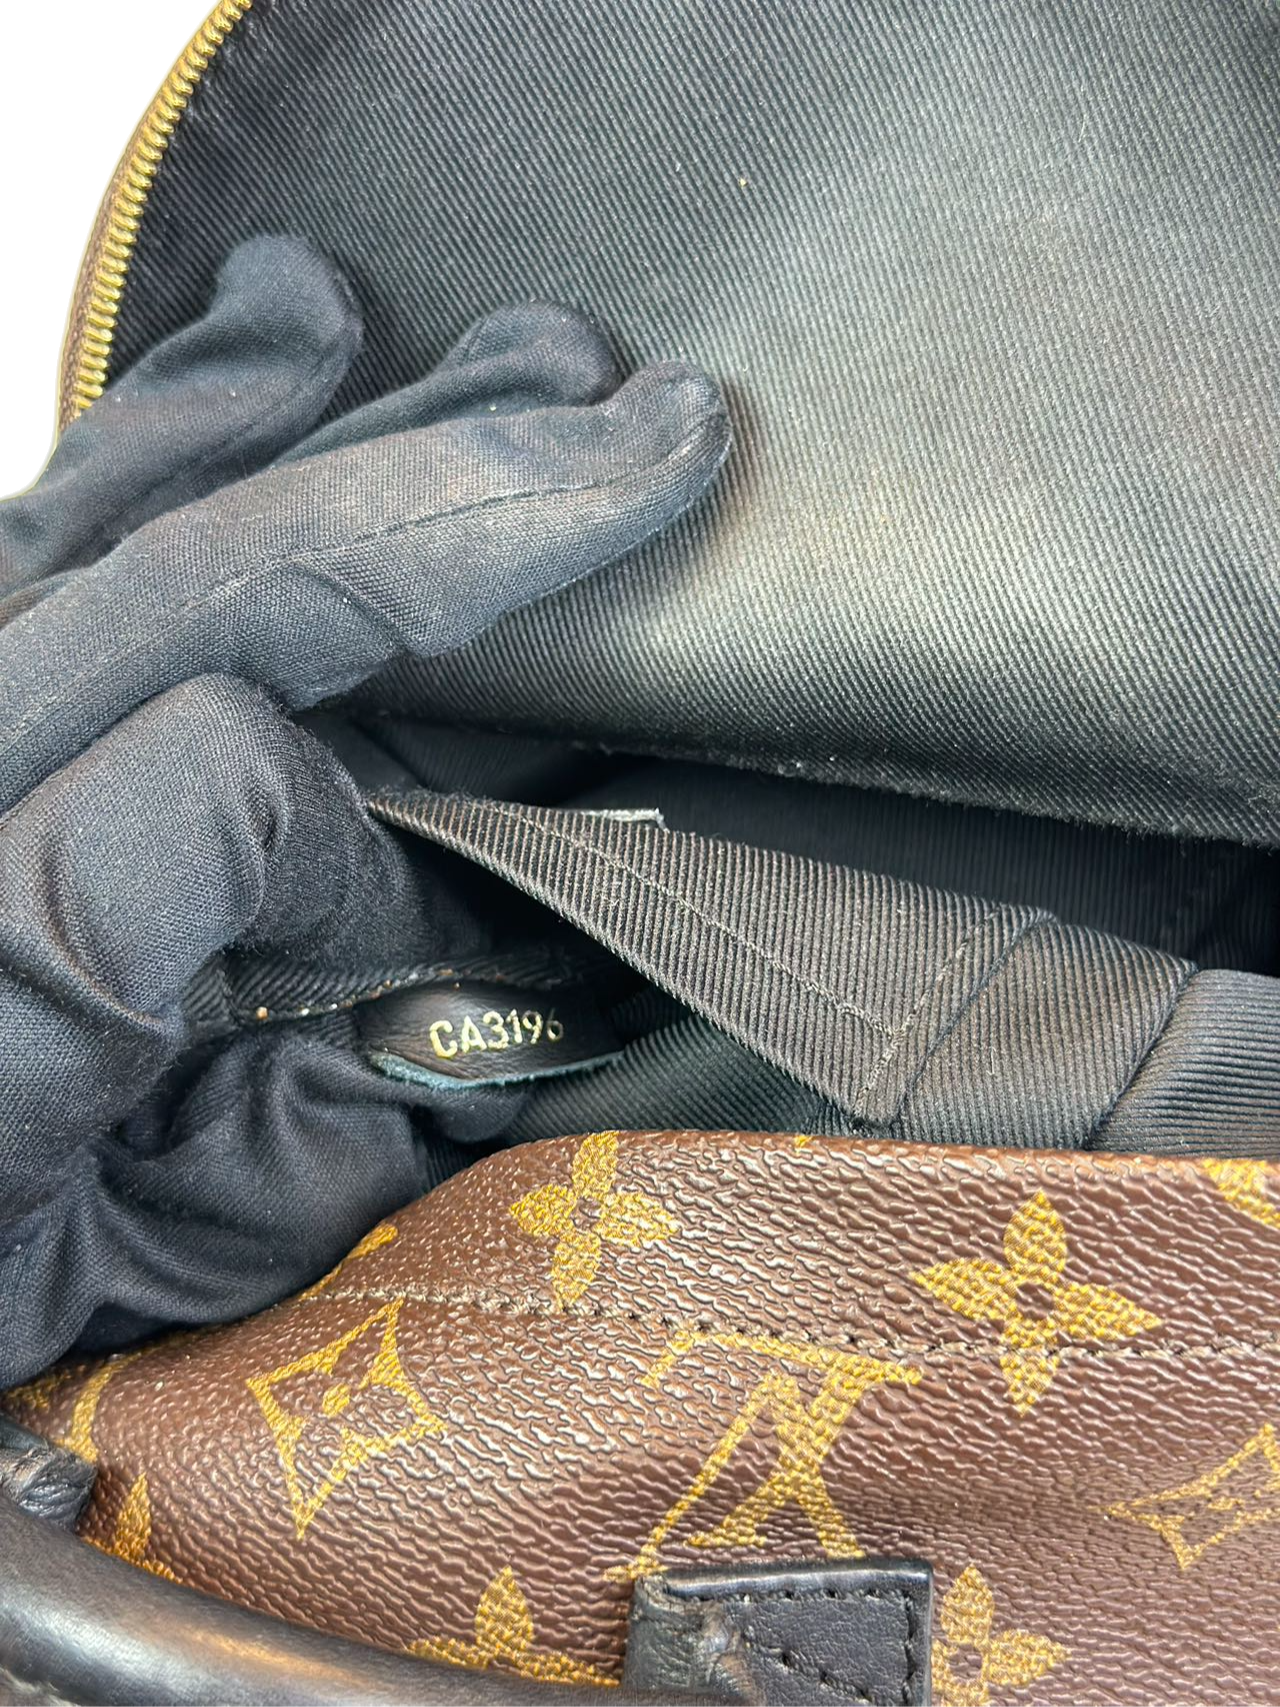 Preloved Louis Vuitton Monogram Canvas Mini Palms Spring Backpack